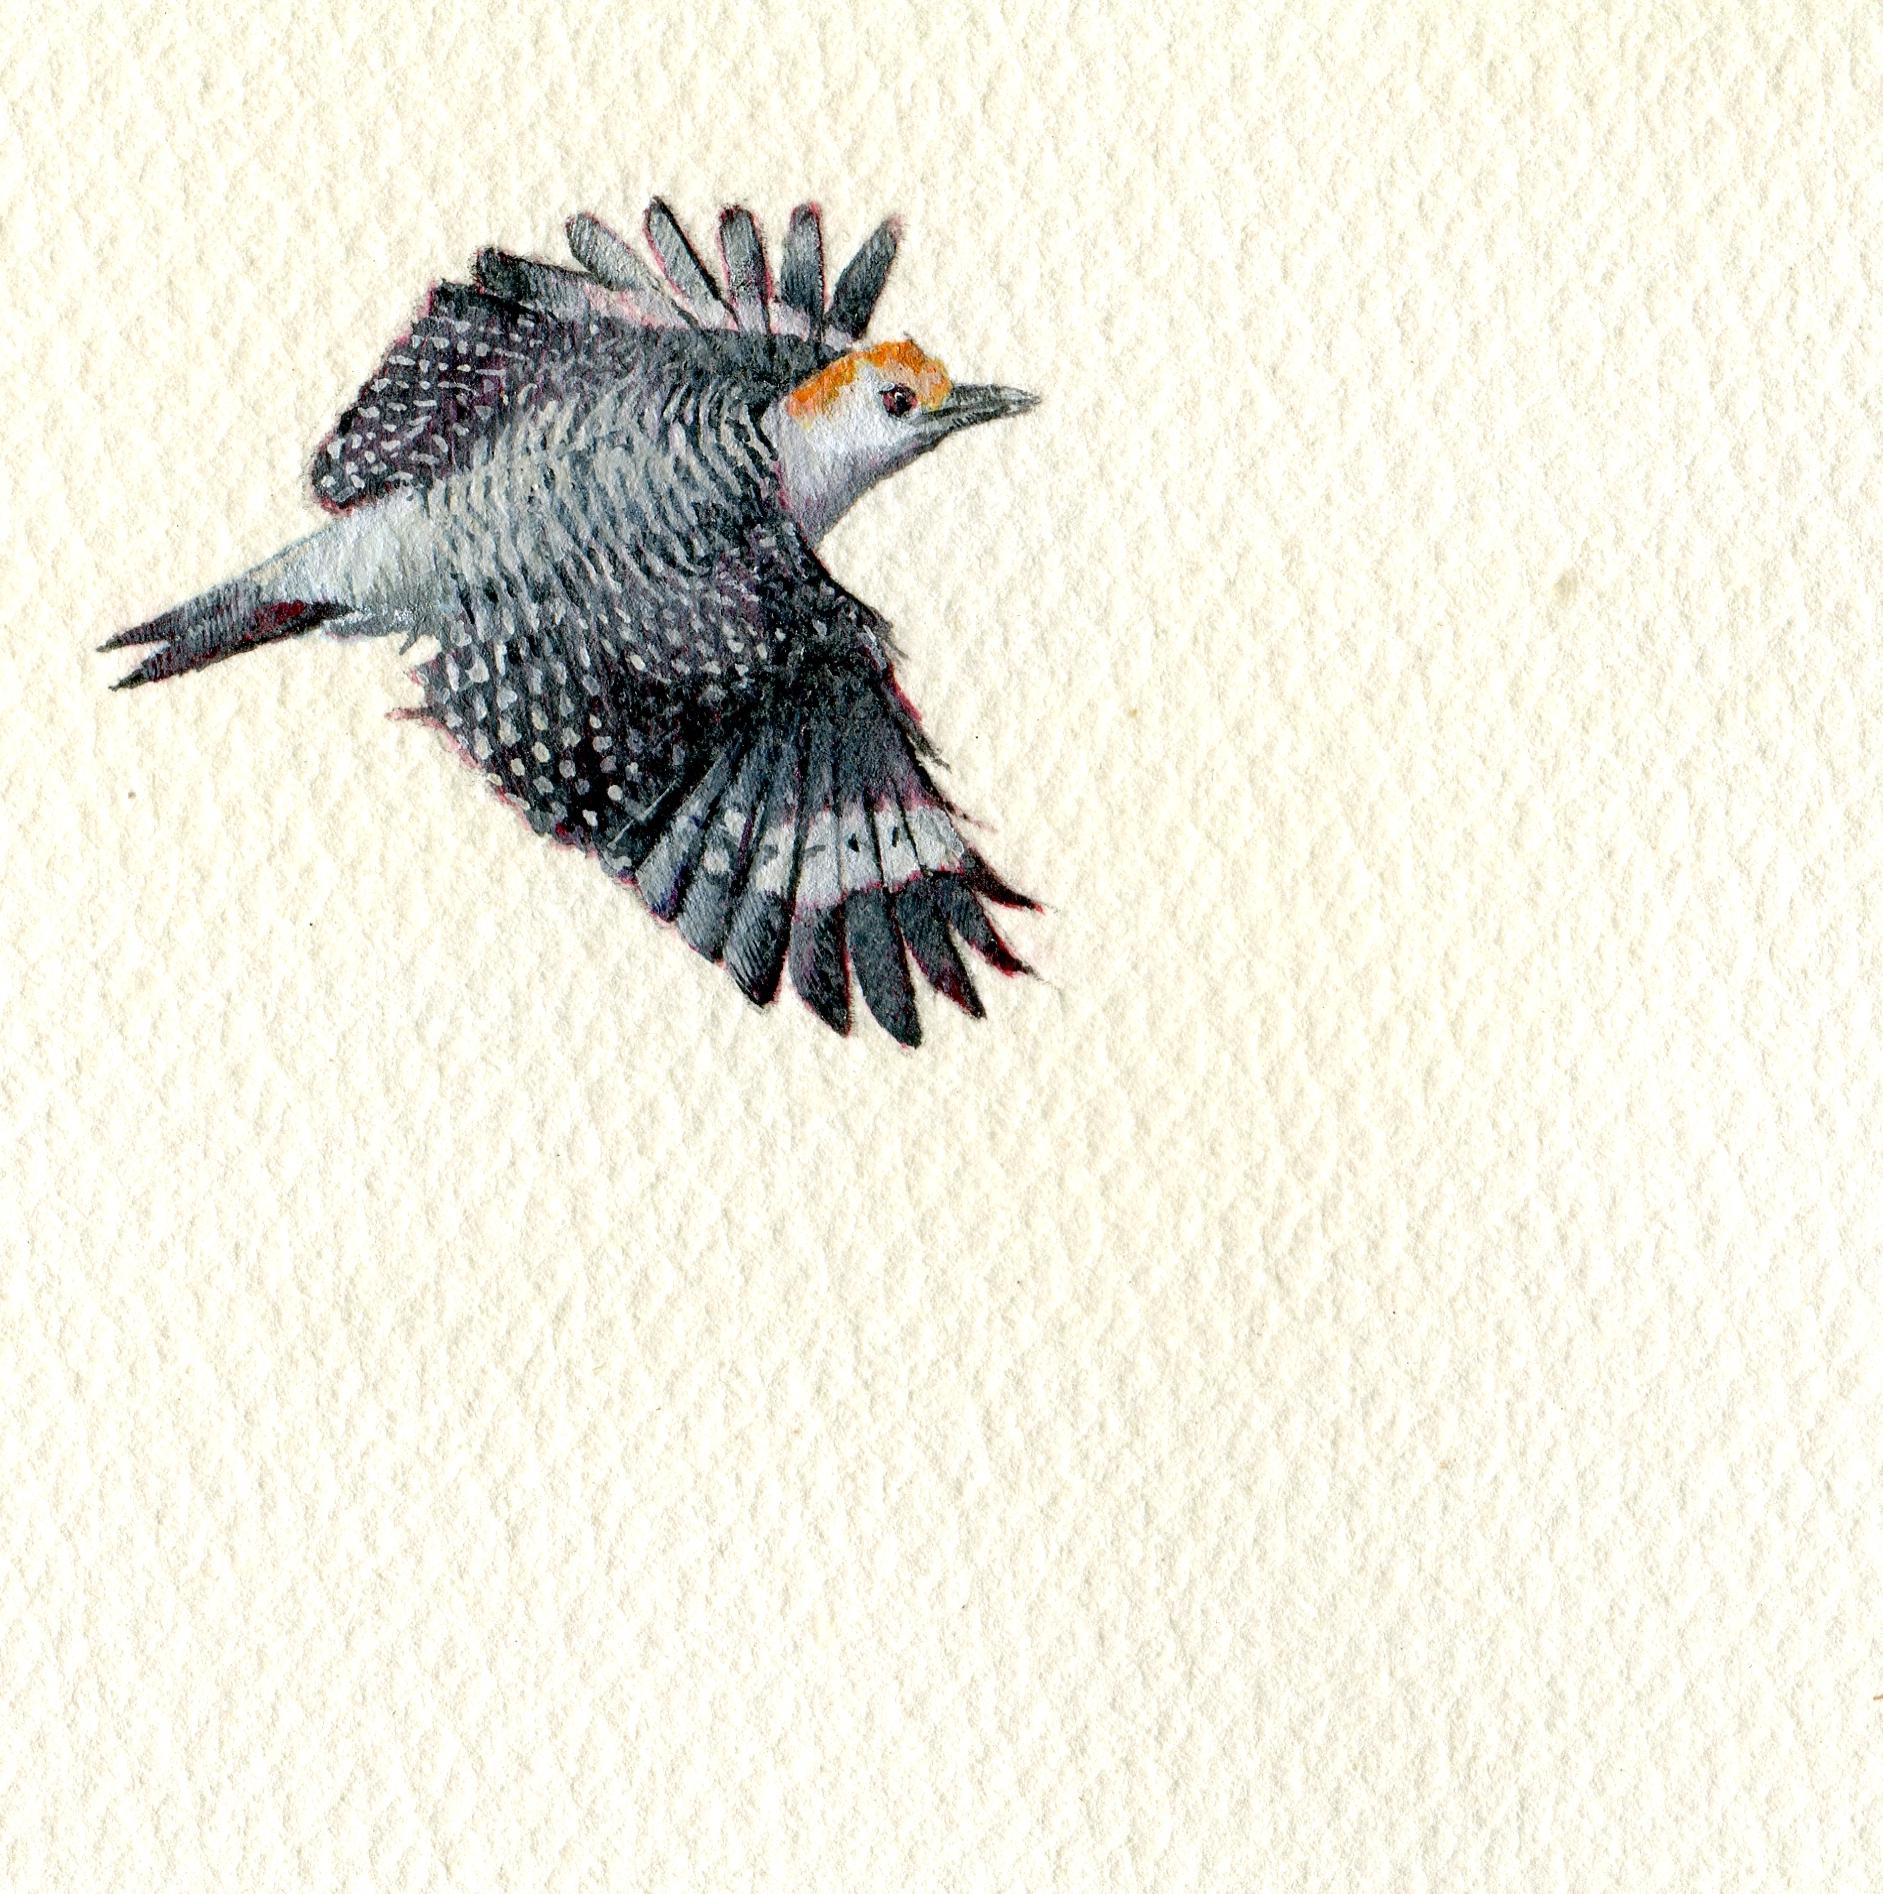 Gold-fronted Woodpecker, realist gouache on paper miniature bird portrait, 2020